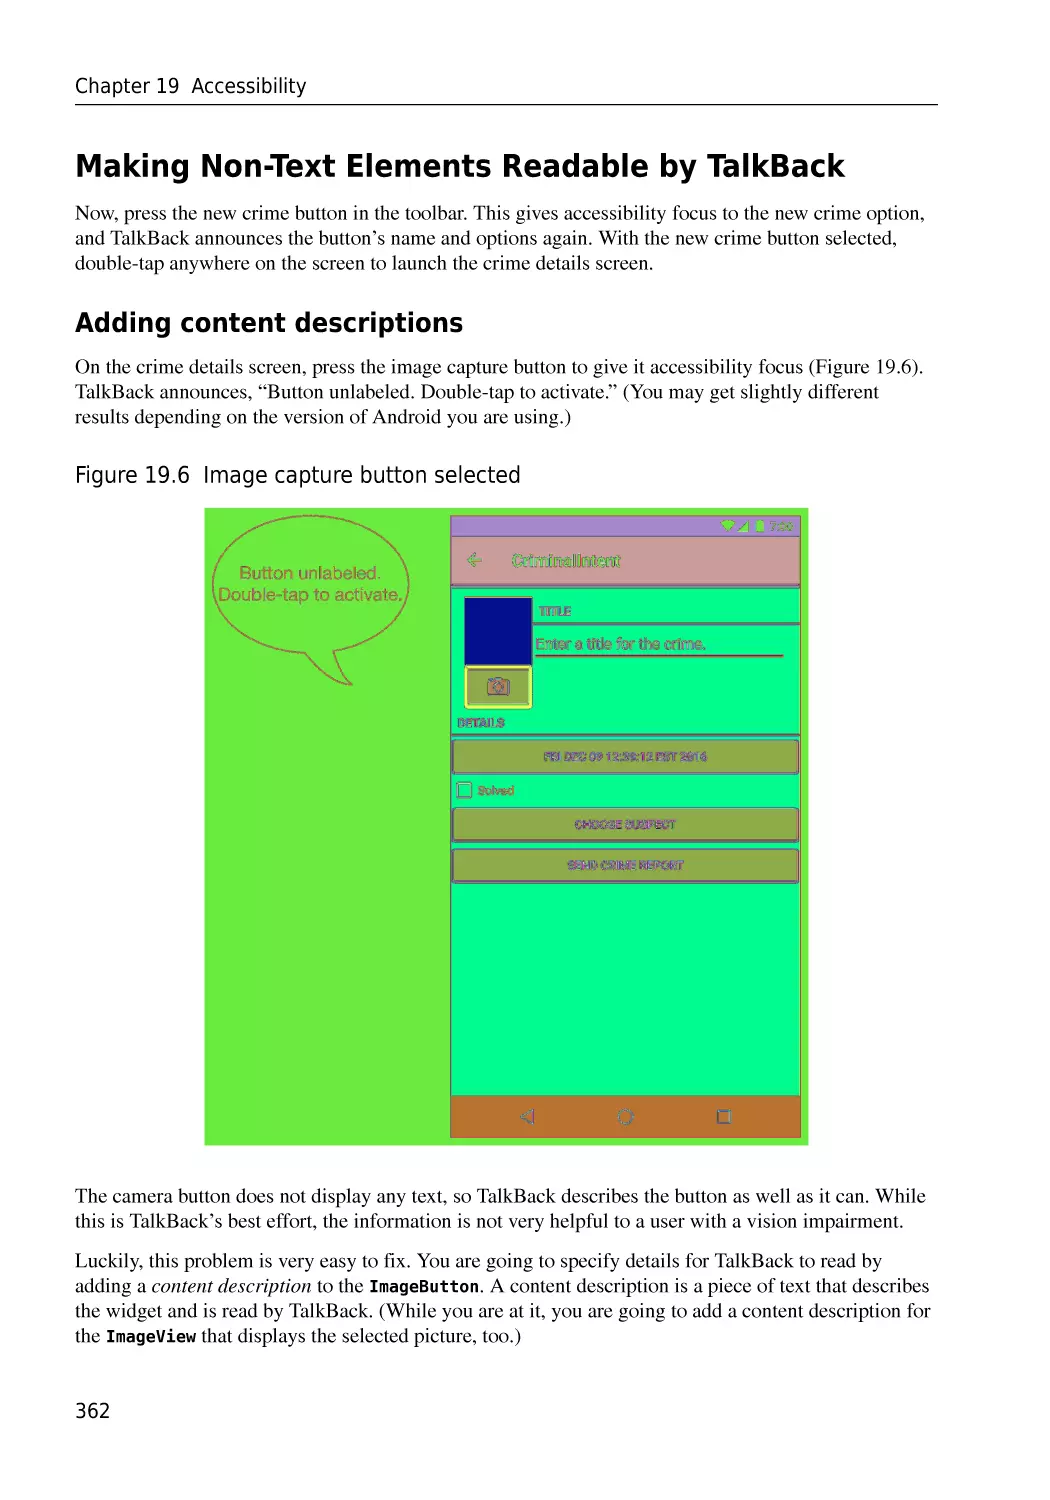 Making Non-Text Elements Readable by TalkBack
Adding content descriptions